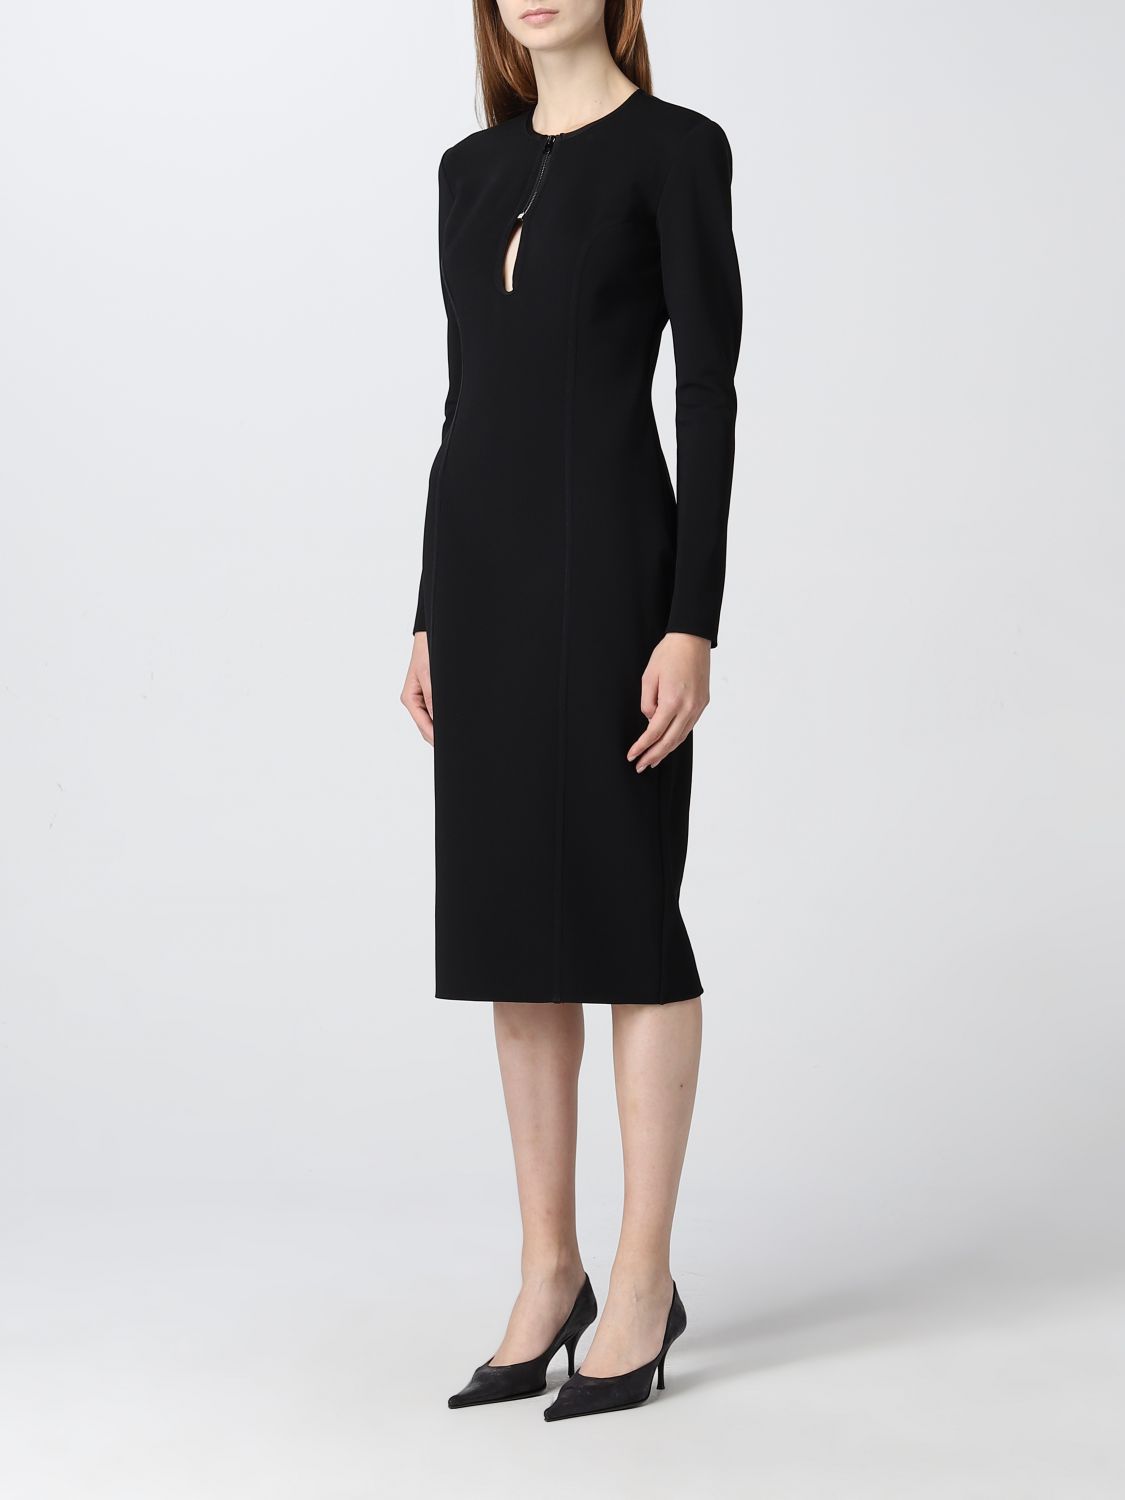 Dress Tom Ford: Tom Ford dress for woman black 3